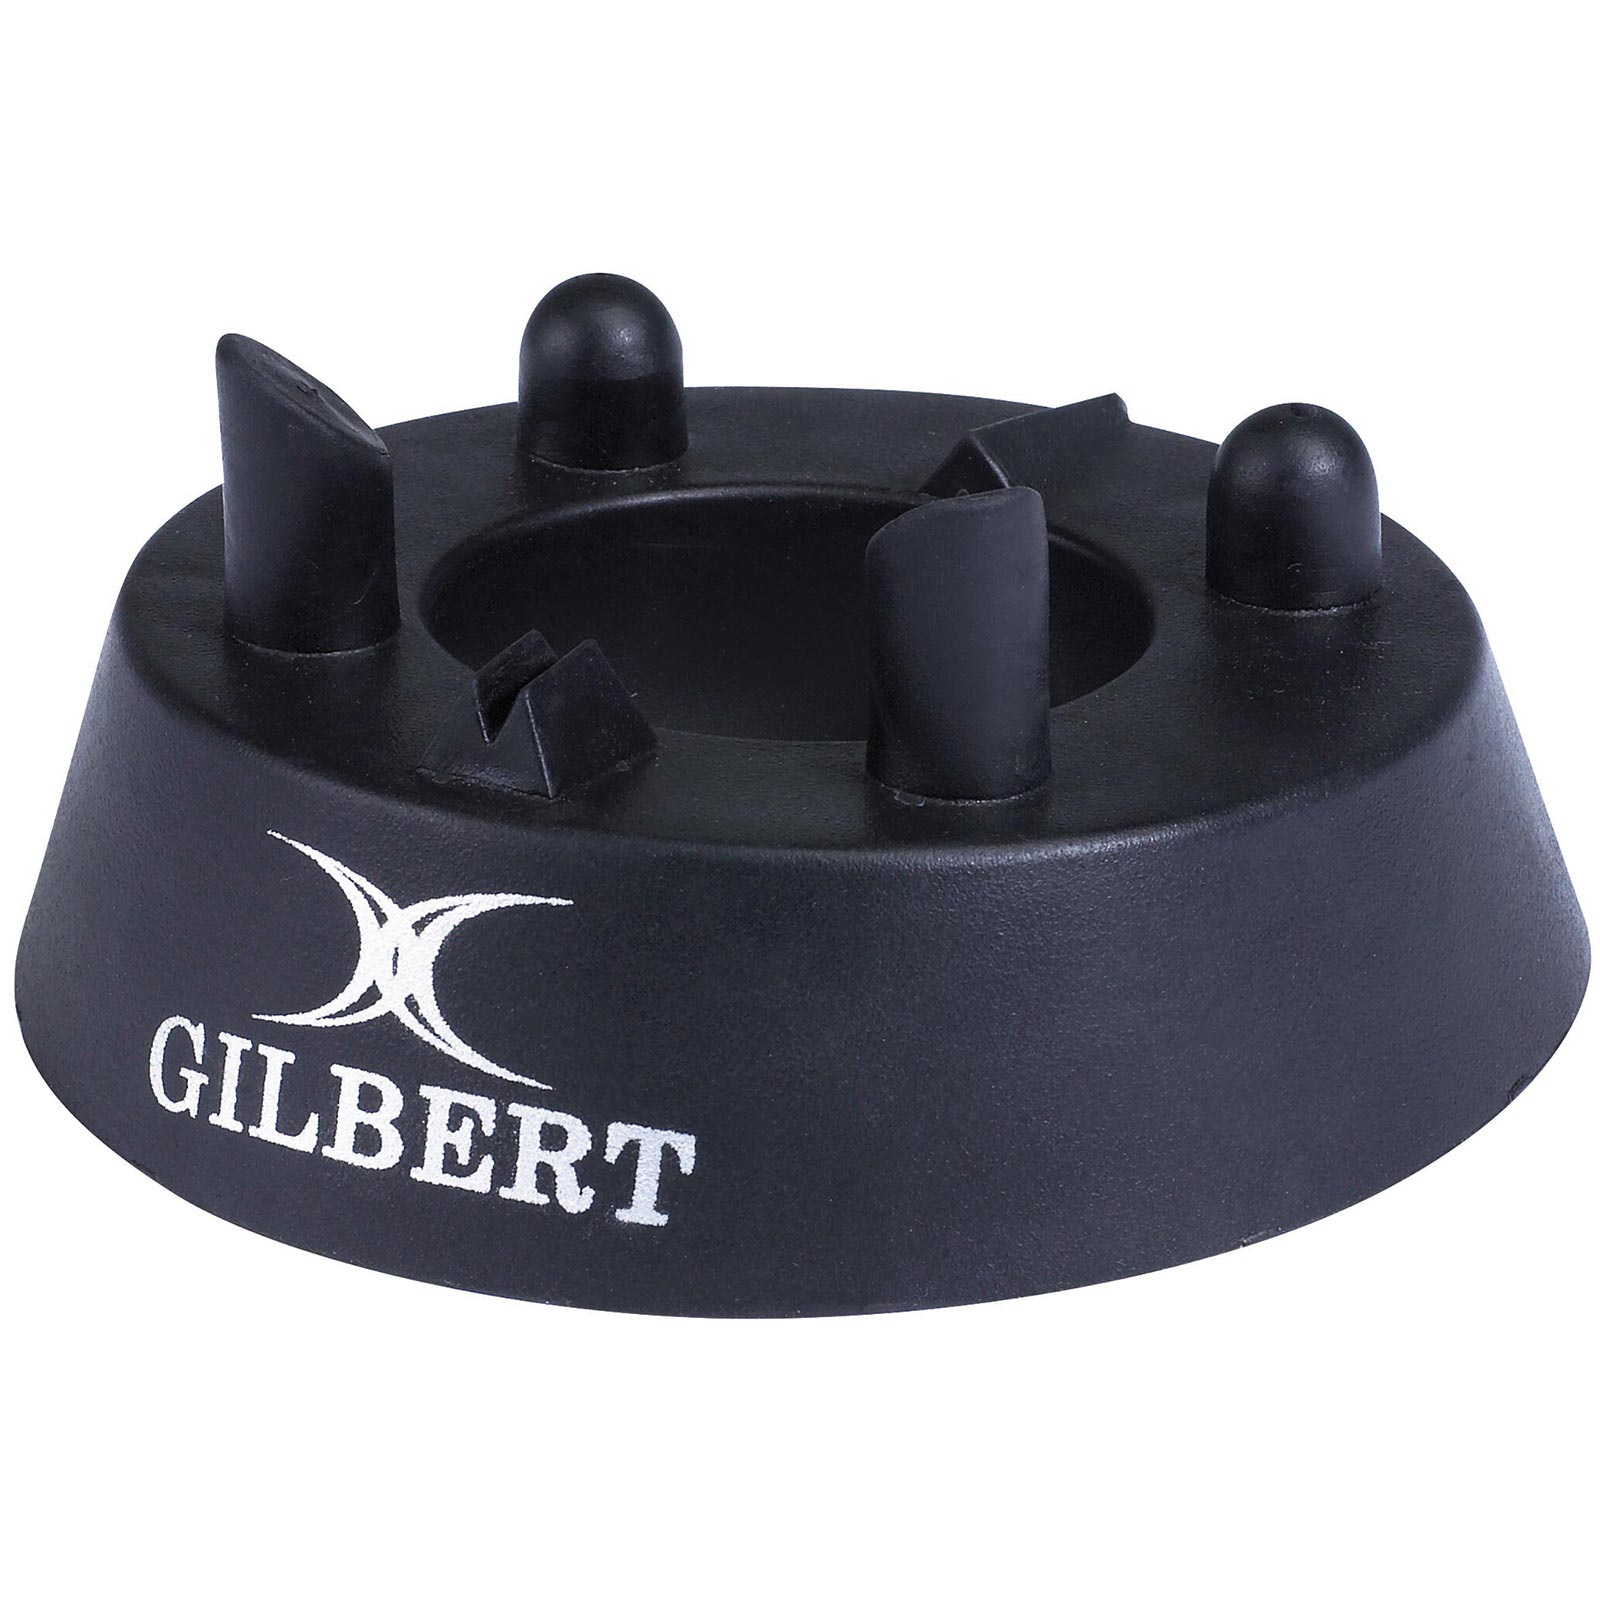 Gilbert 450 Precision Kicking Tee Black